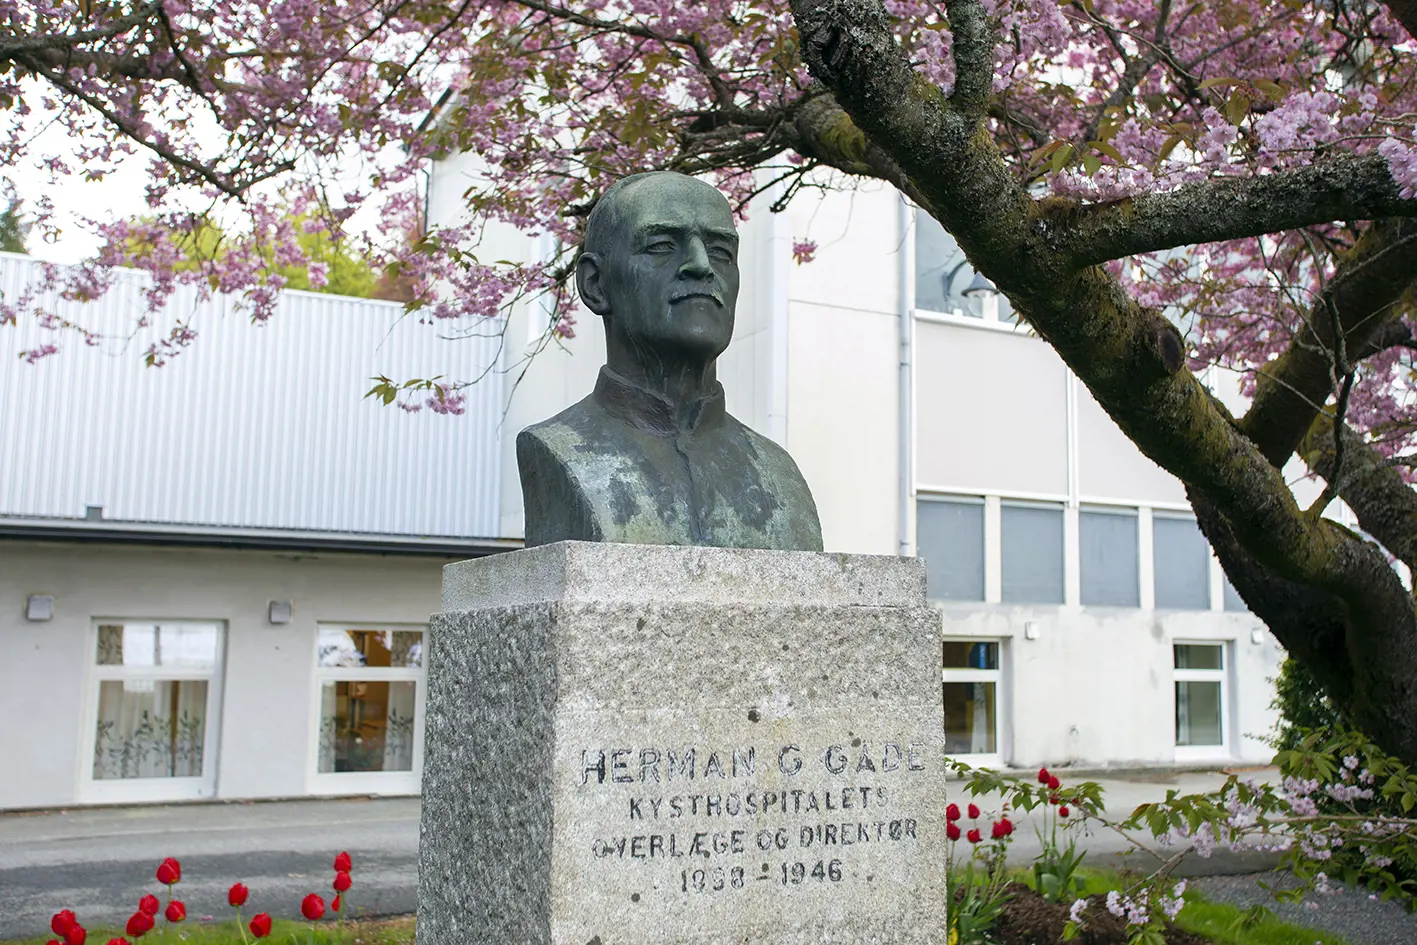 Herman G. Gade